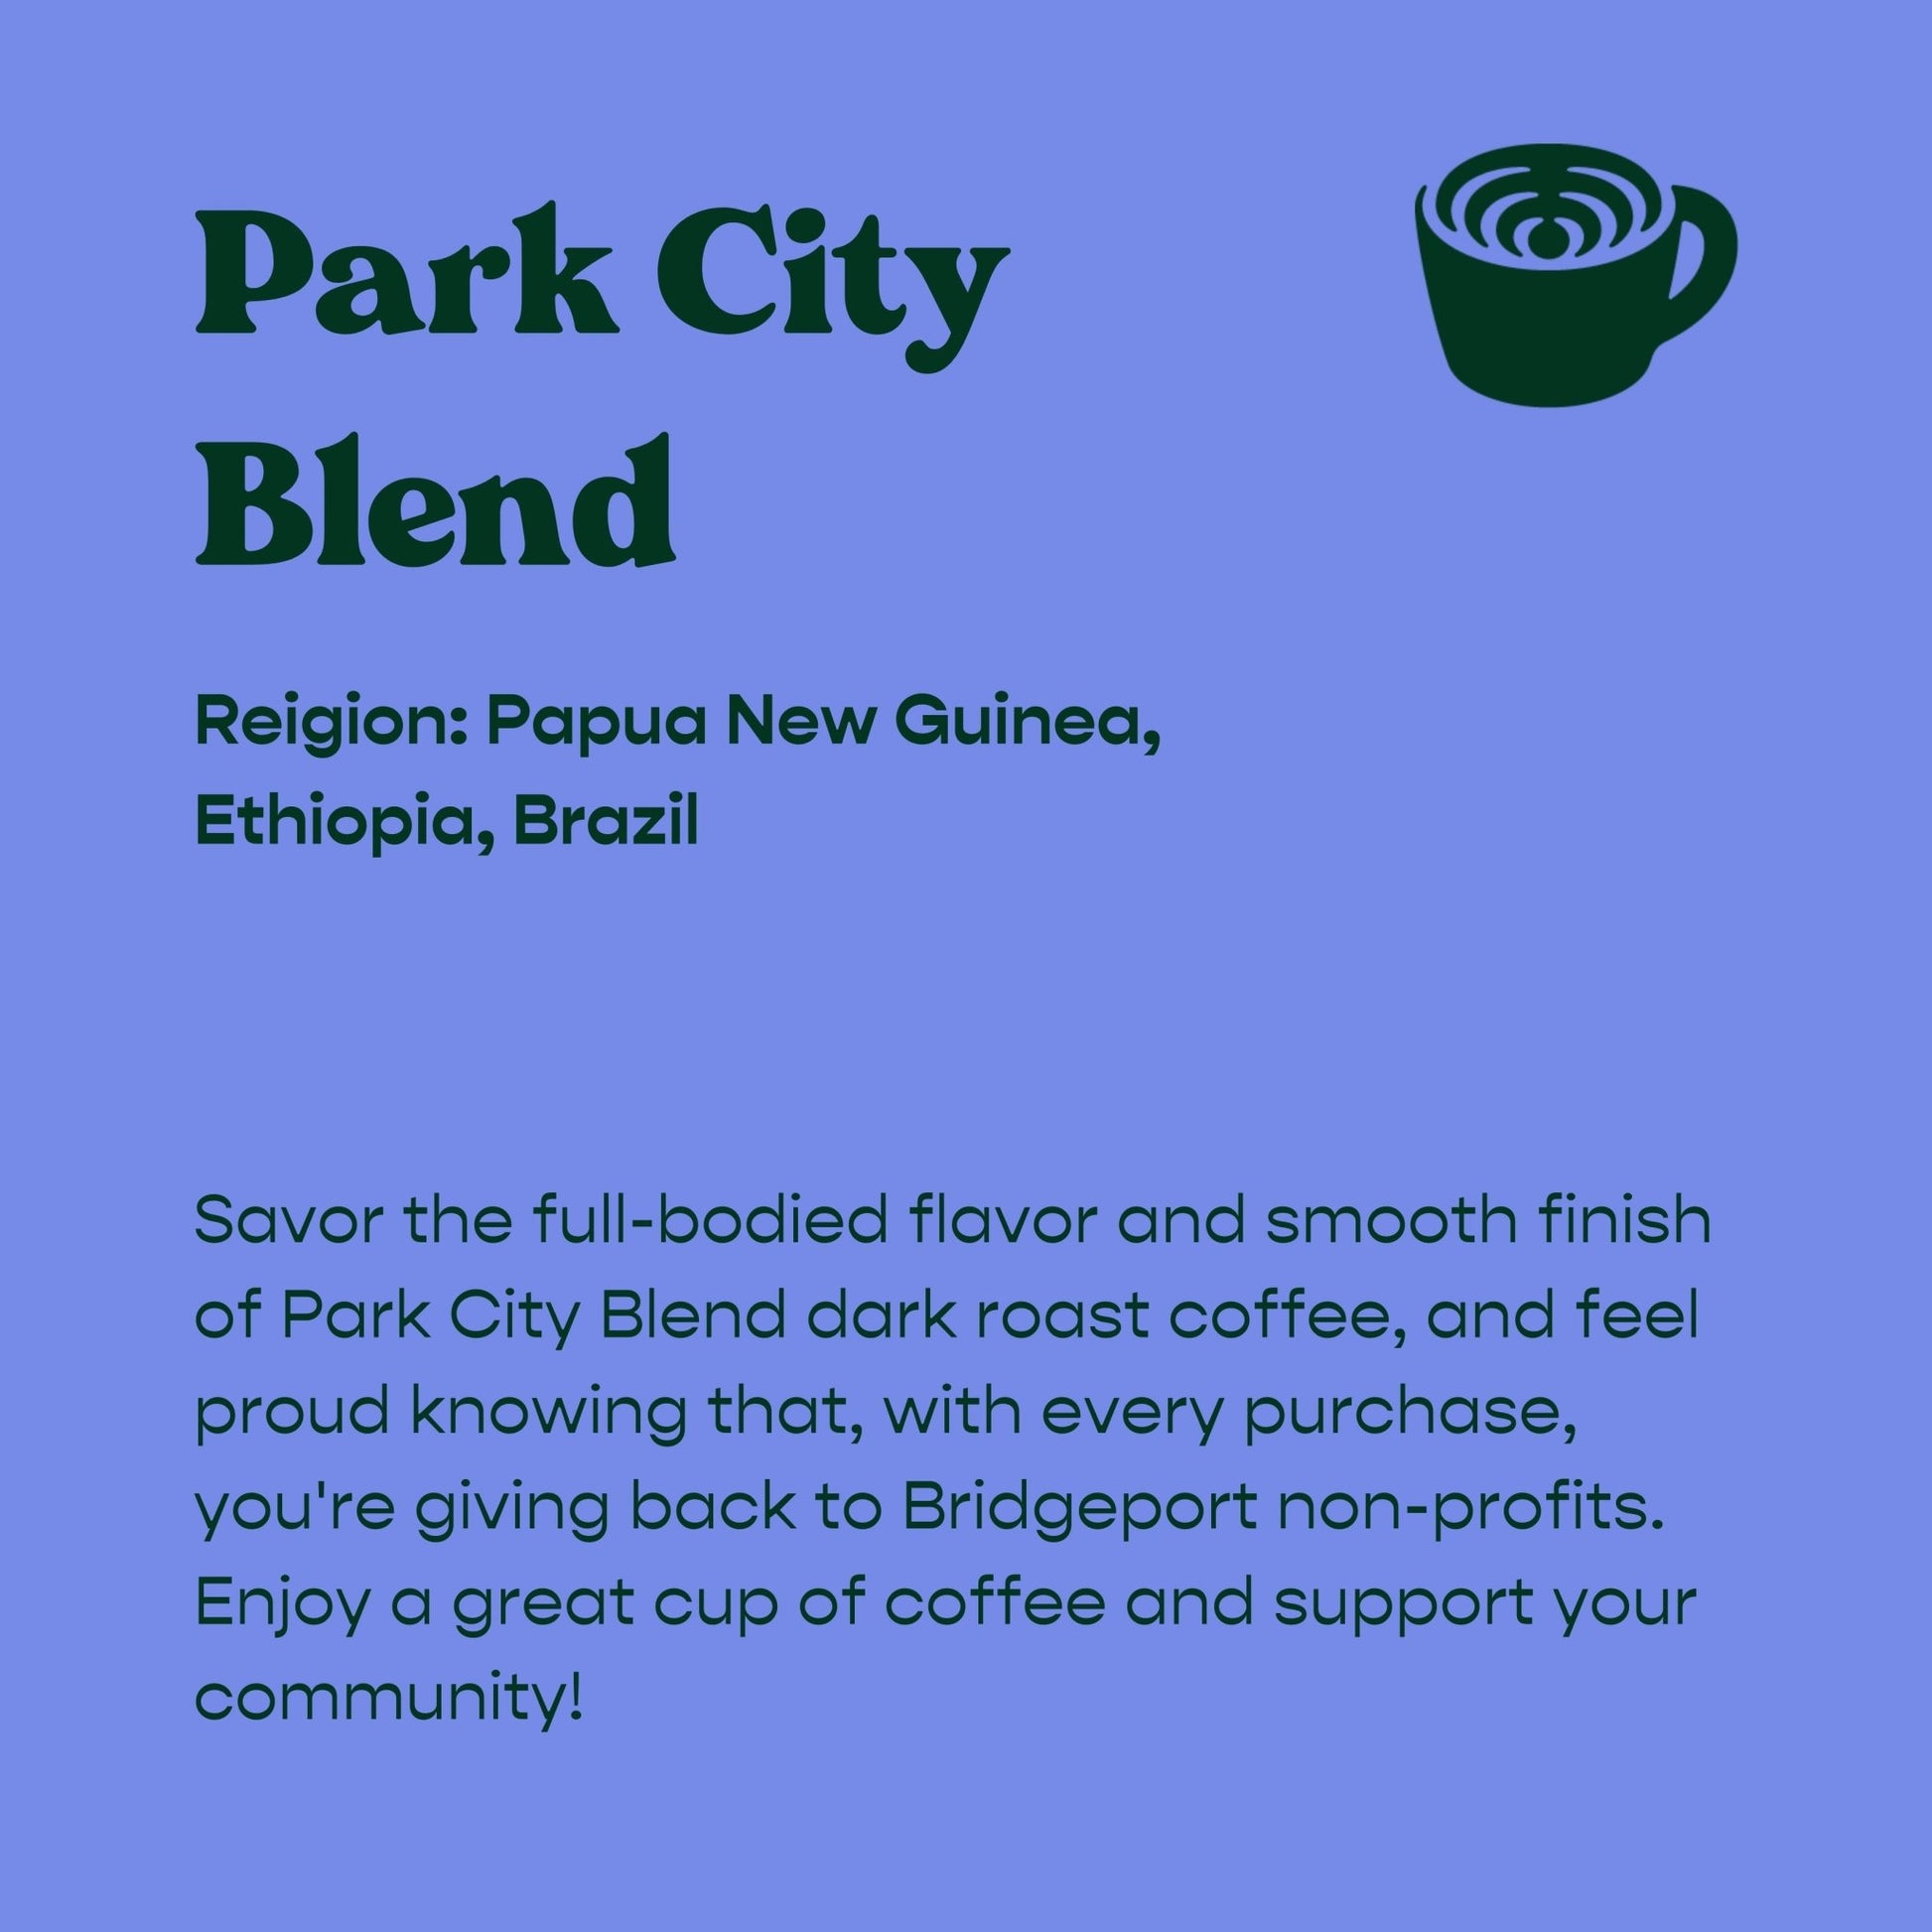 Park City Blend (Medium Roast) - Sound Coffee